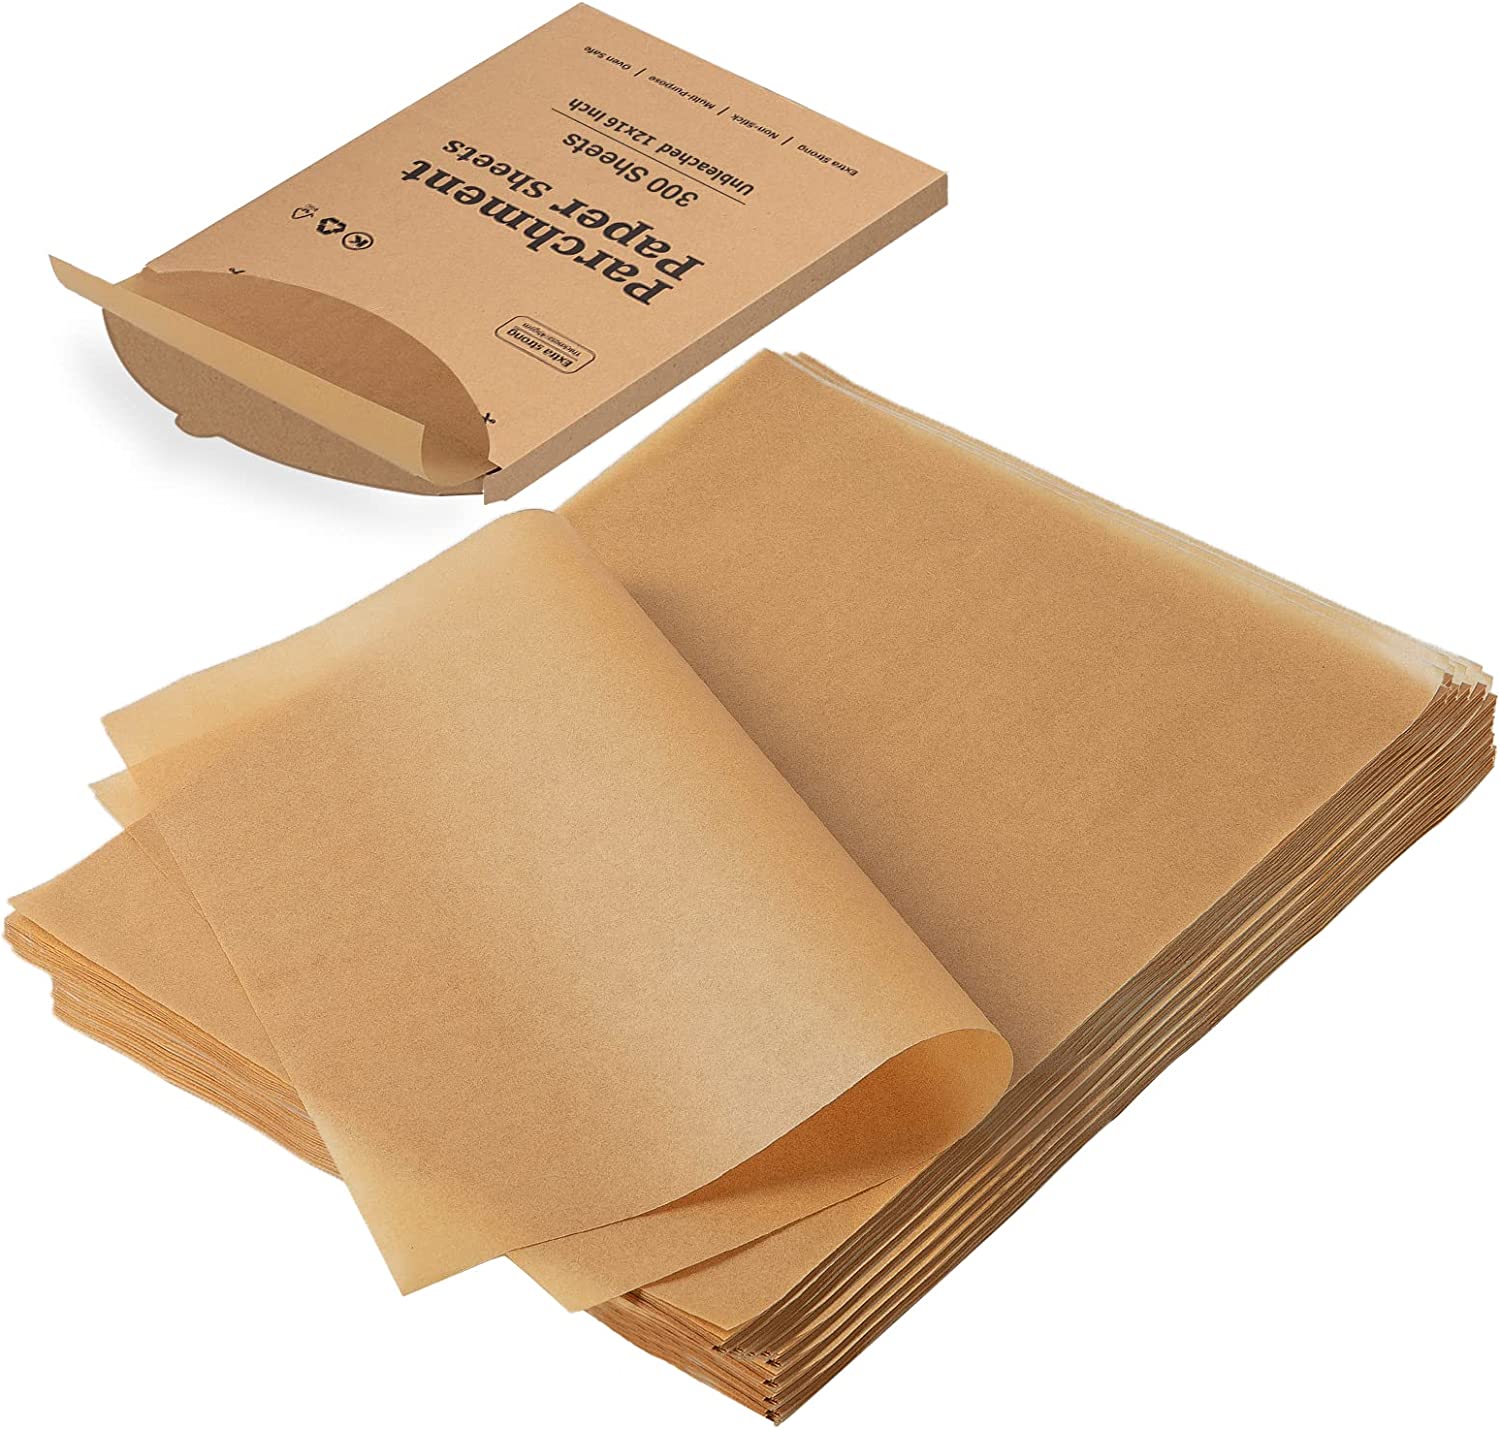 Katbite 300 Sheets 12x16 In Parchment Paper, Heavy Duty Baking Paper